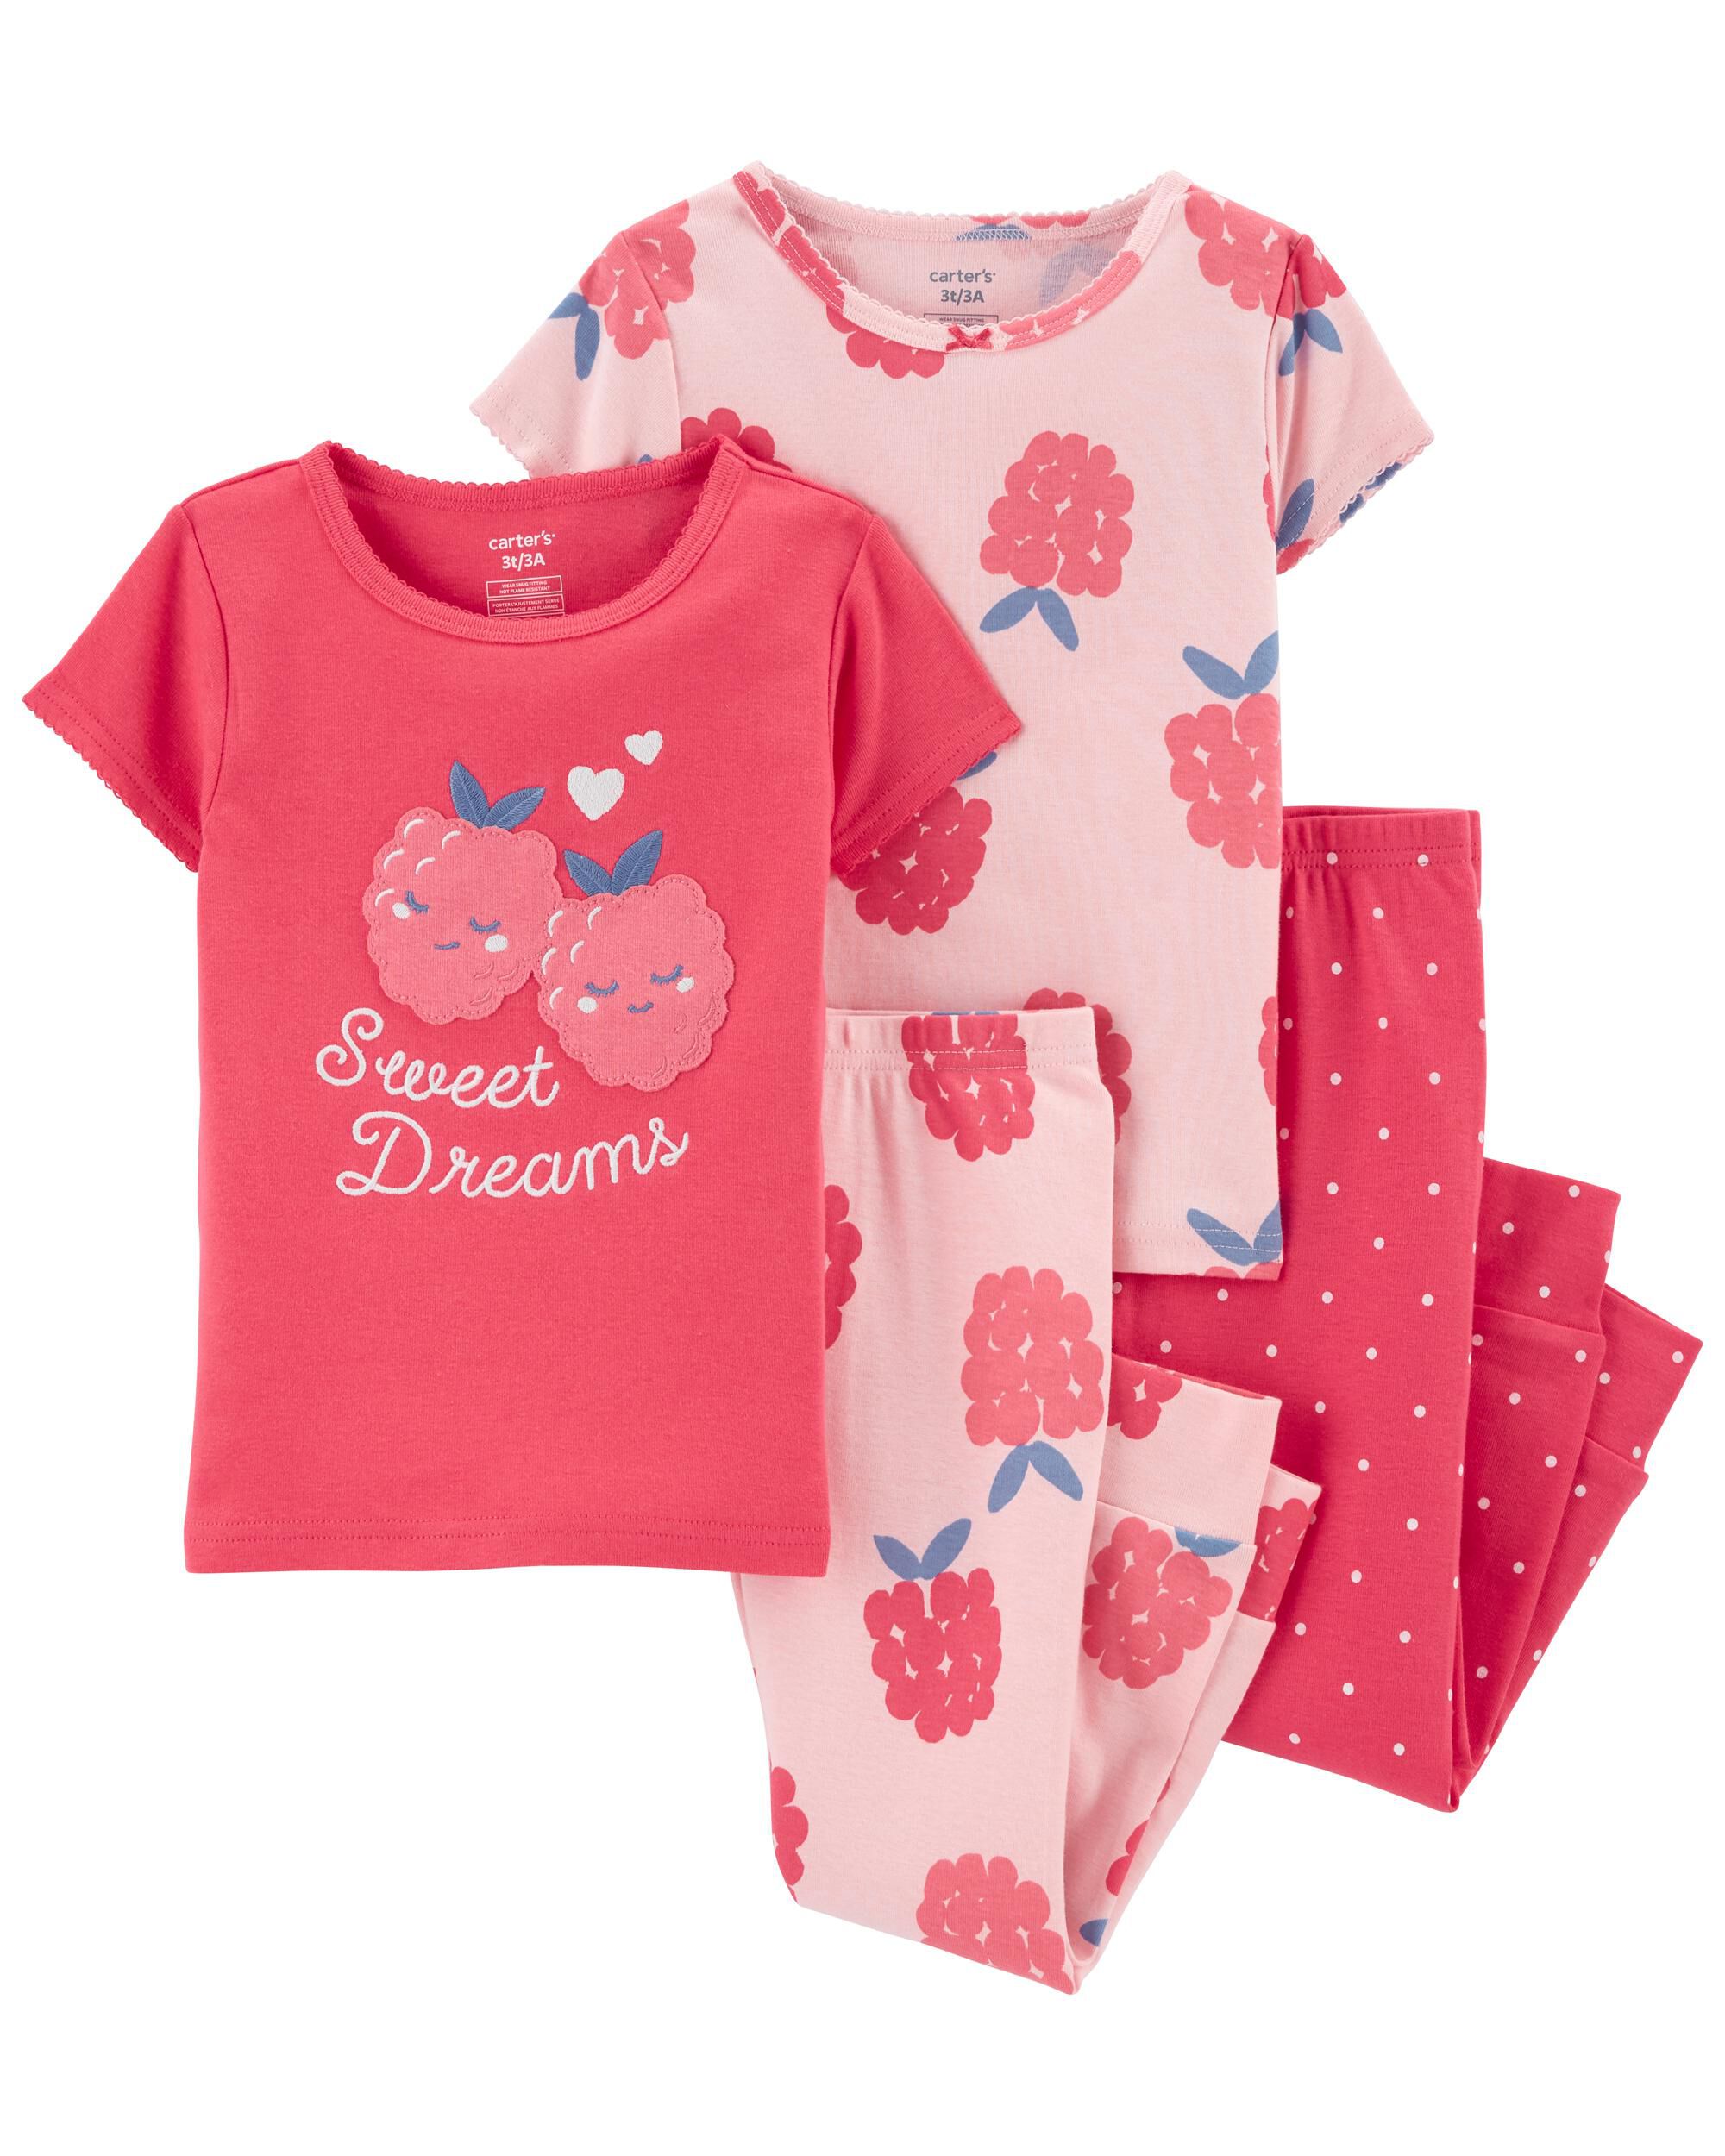 Carter's Sleepwear Pyjama Filles Neuf Avec étiquettes Zebra Rose Noir 